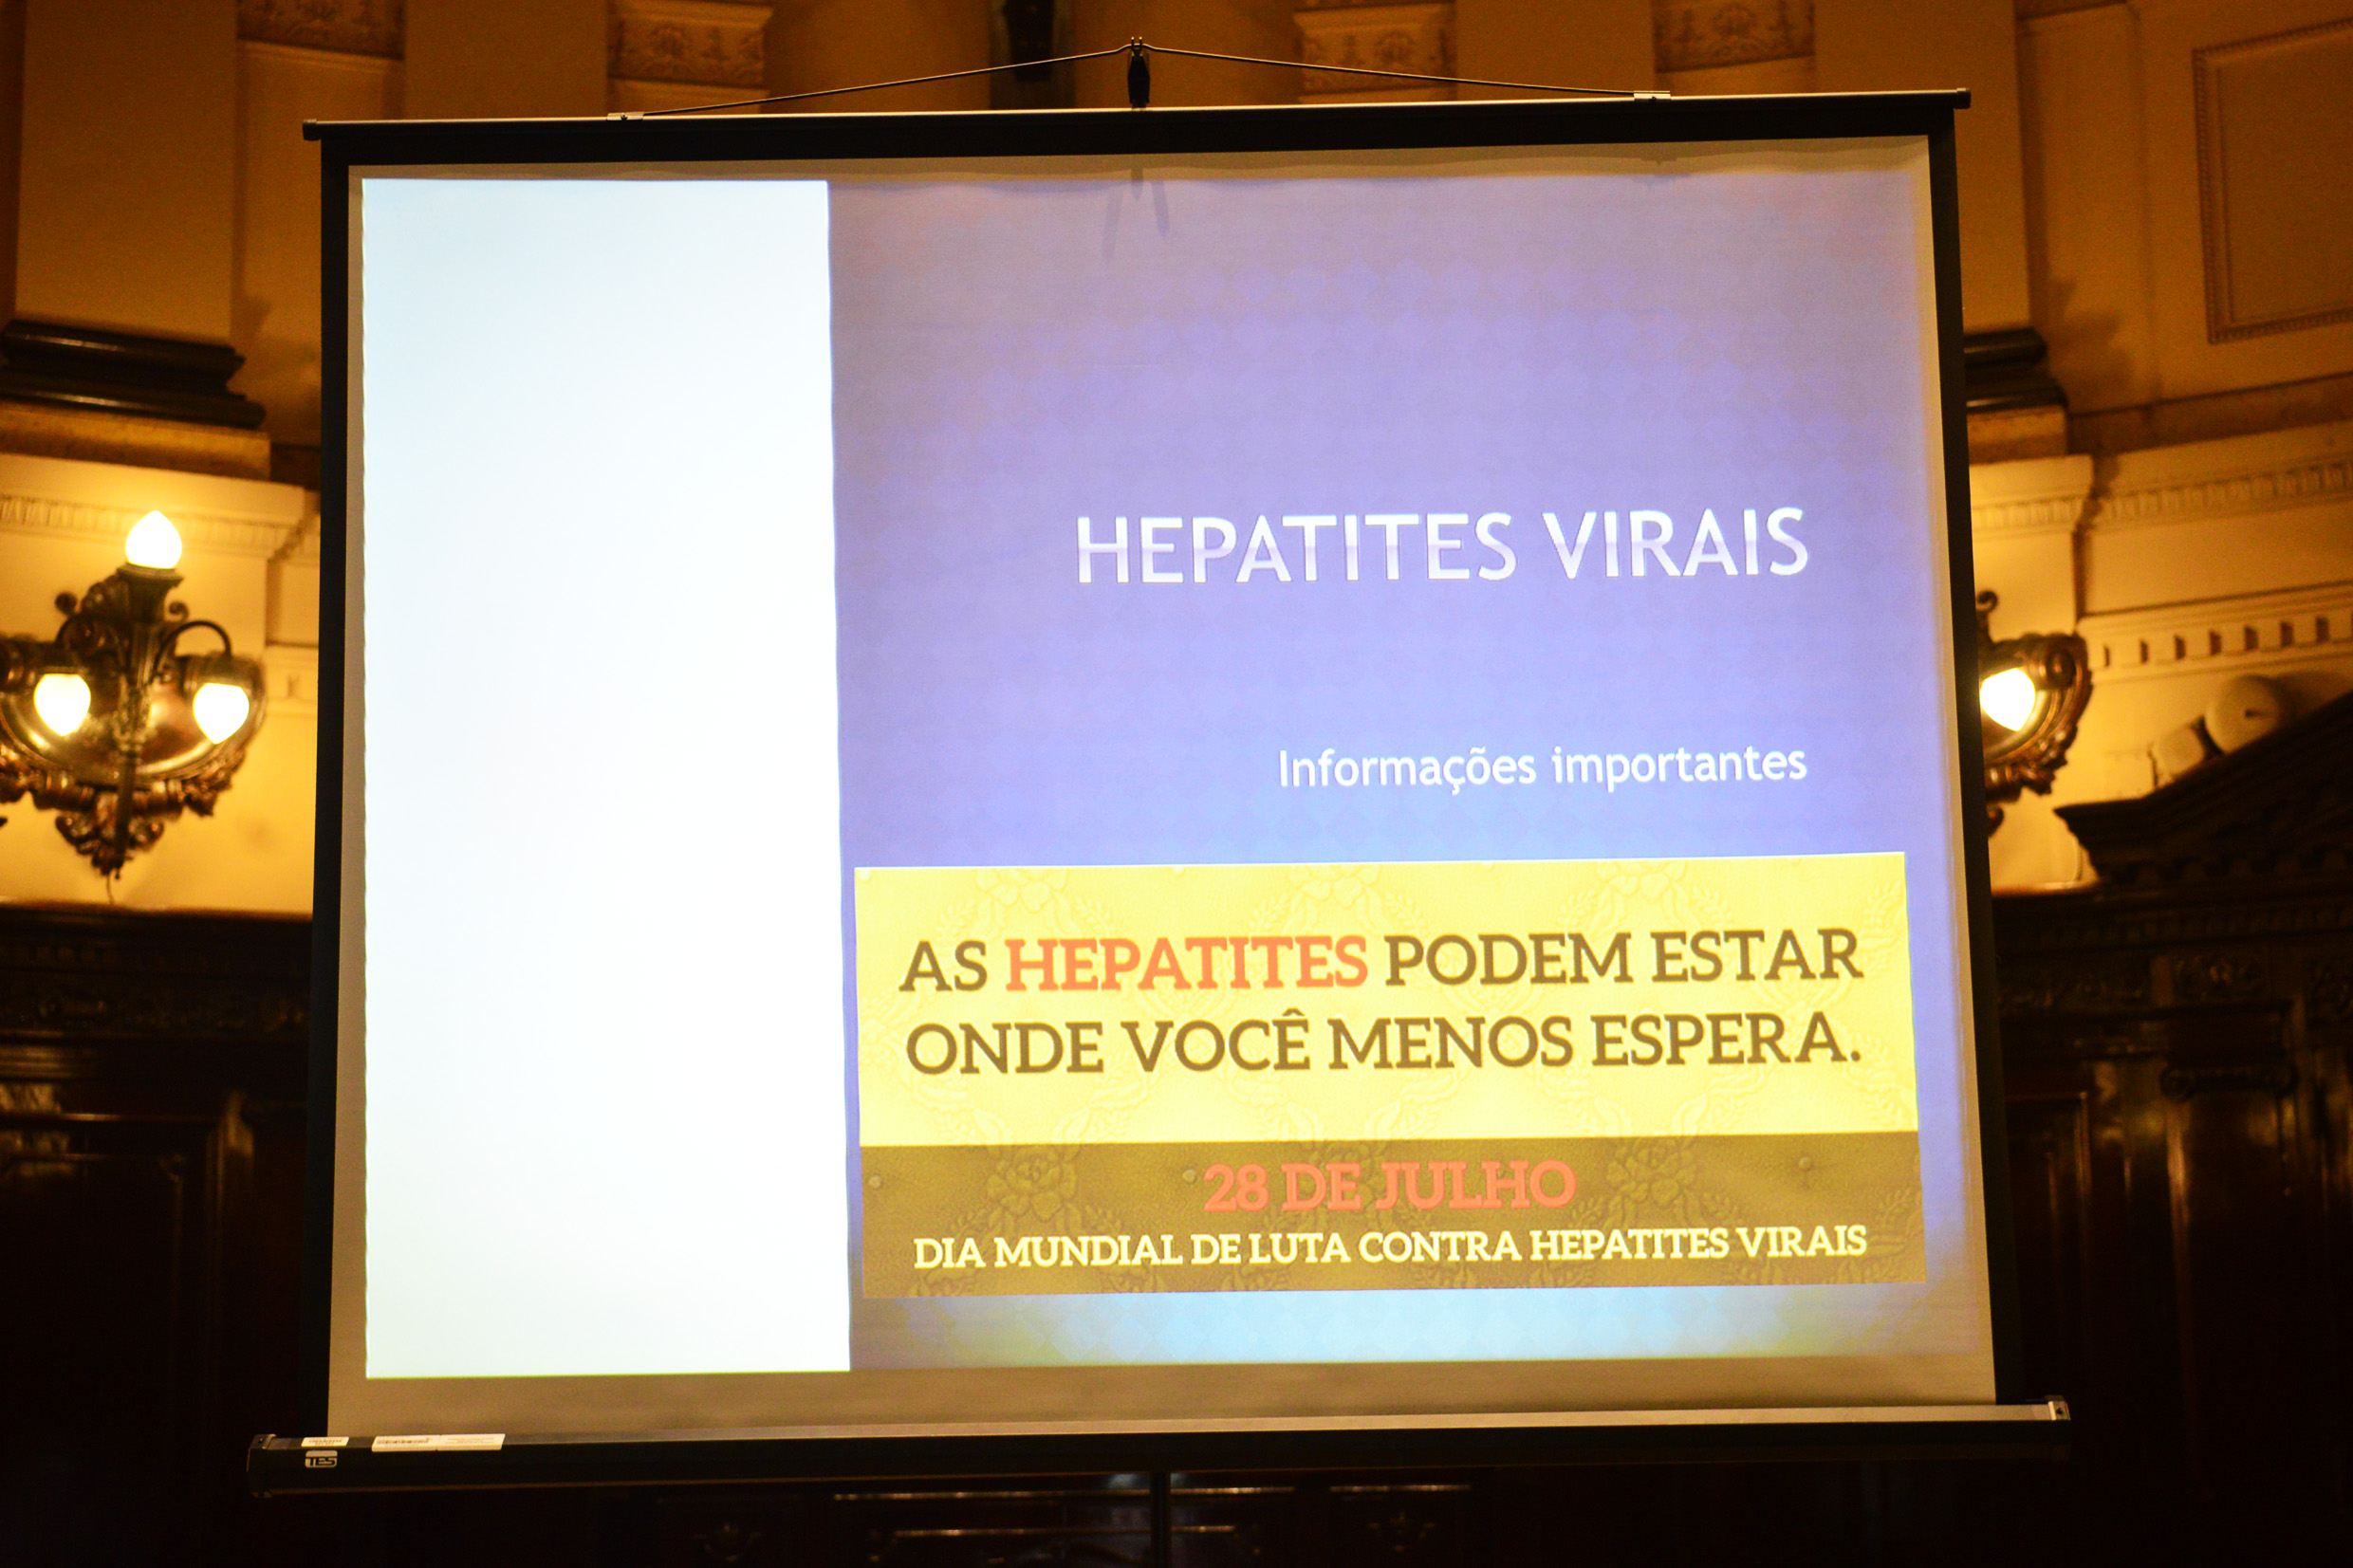 Exibio sobre hepatites virais <a style='float:right;color:#ccc' href='https://www3.al.sp.gov.br/repositorio/noticia/N-07-2015/fg173181.jpg' target=_blank><i class='bi bi-zoom-in'></i> Clique para ver a imagem </a>